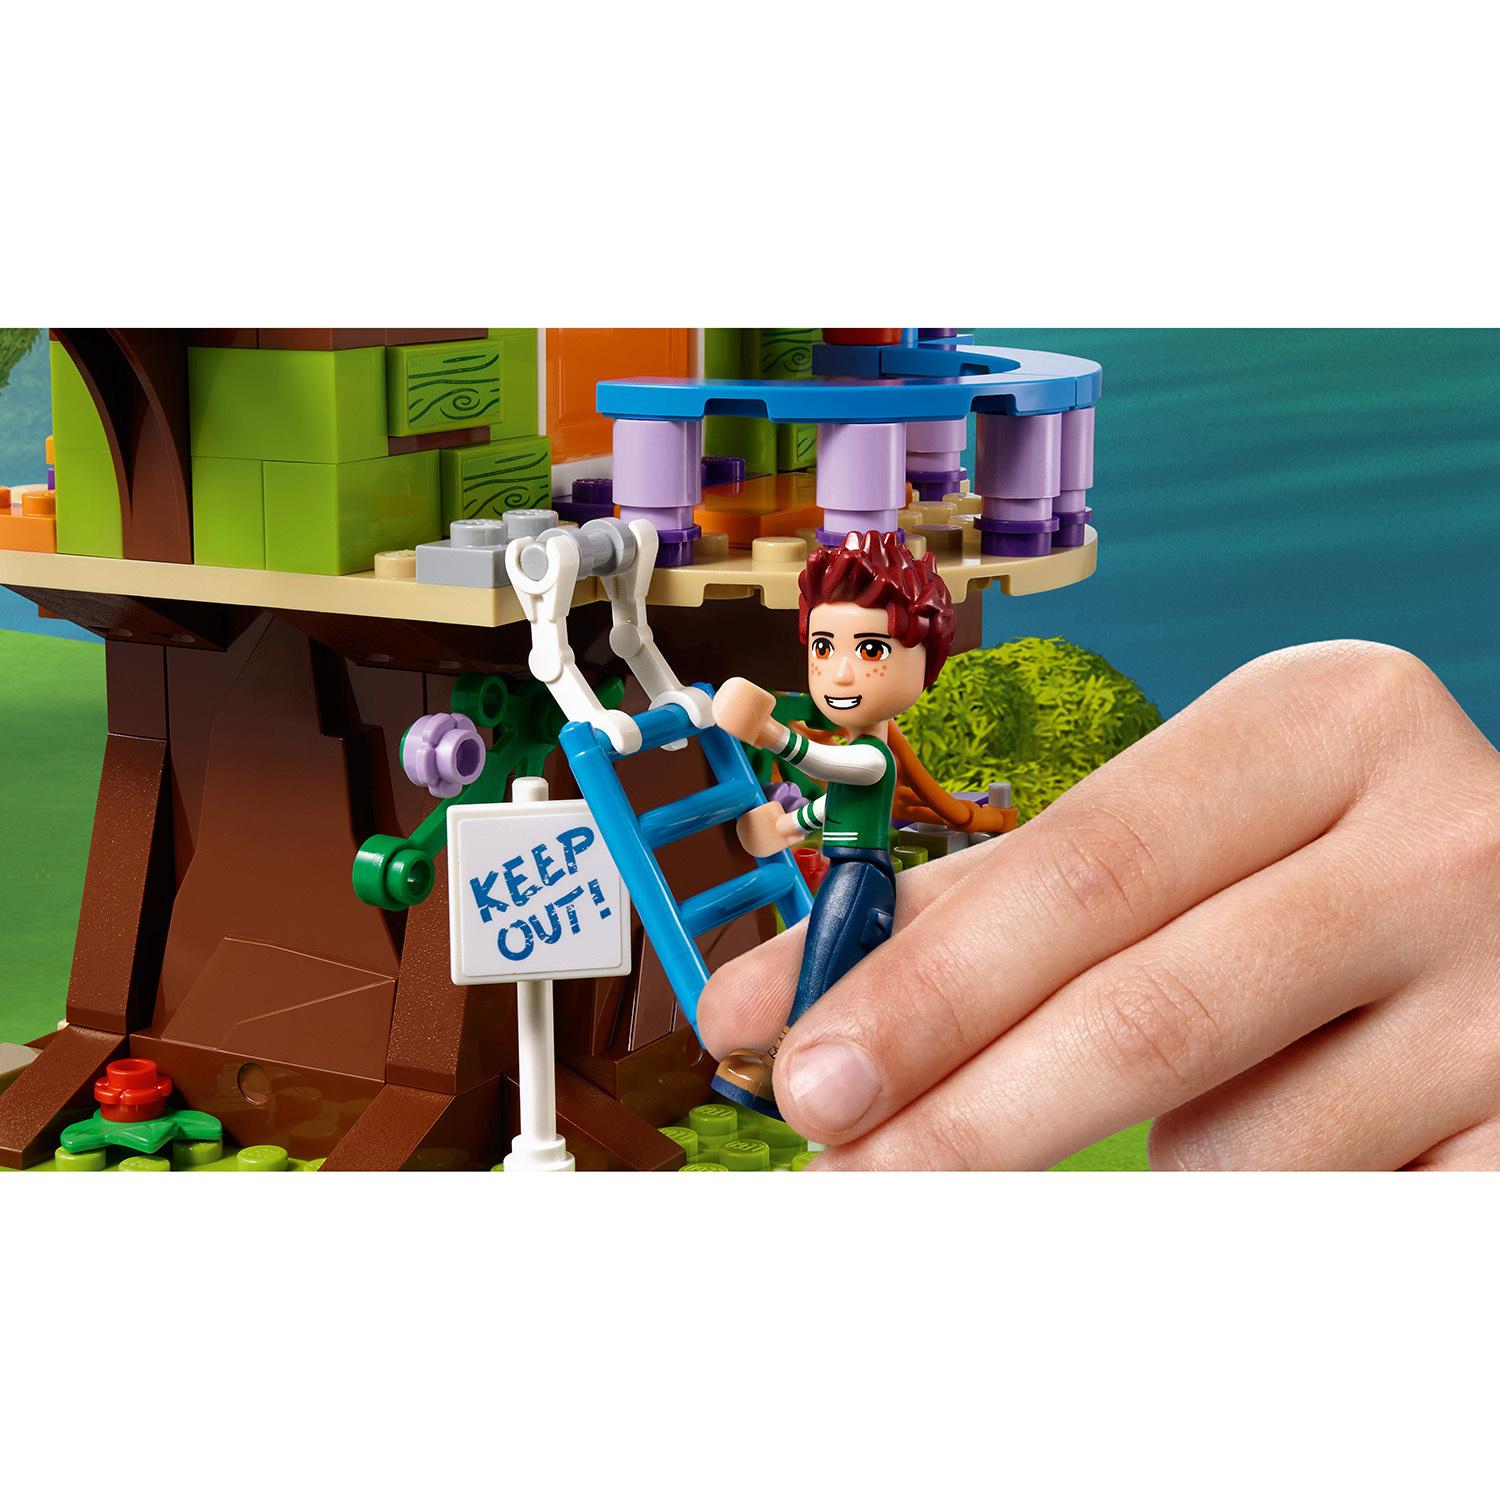 Конструктор Lego Friends - Домик Мии на дереве  